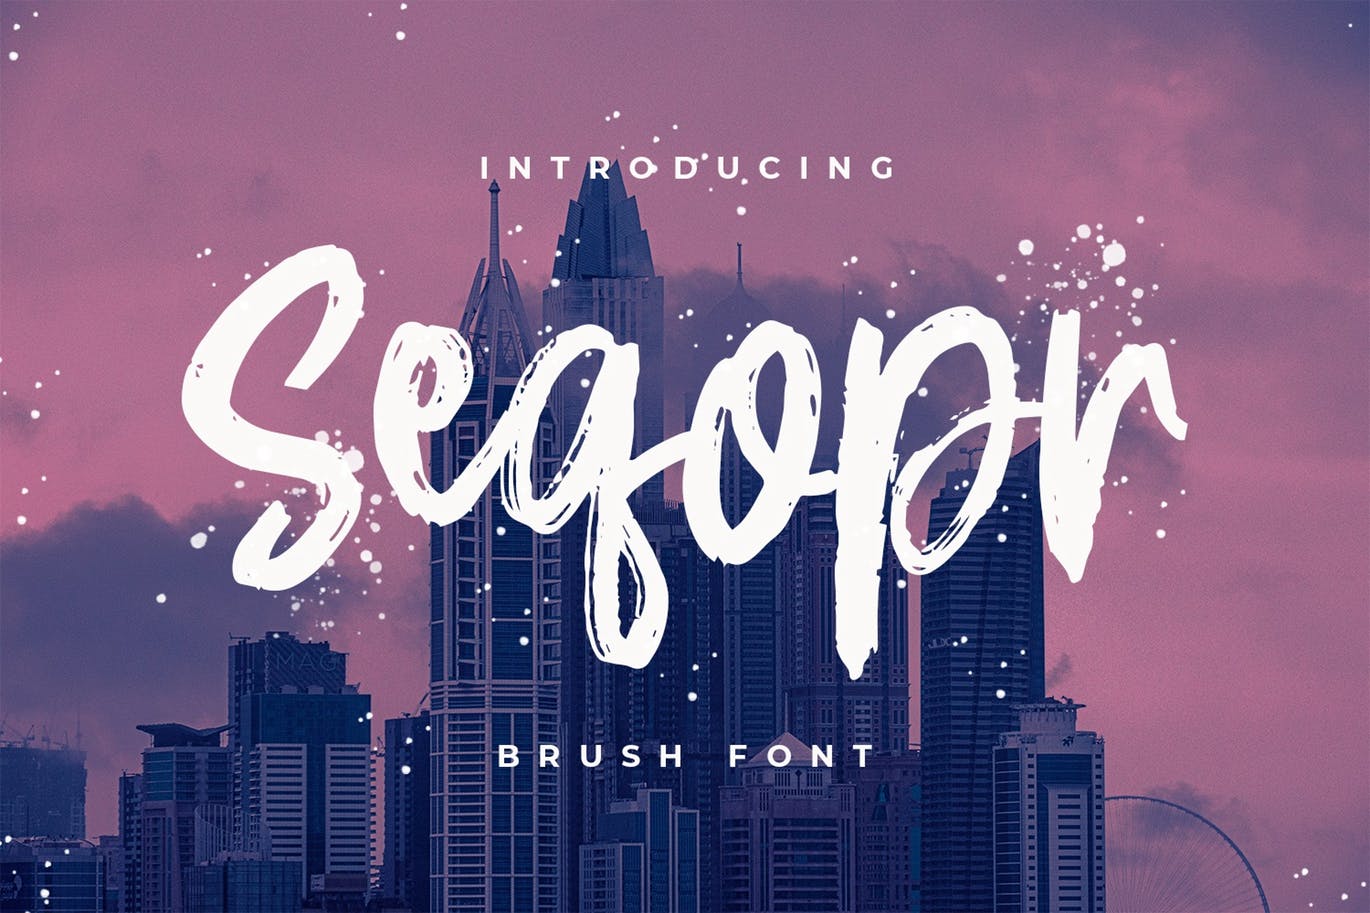 Logo/印刷设计英文笔刷字体16图库精选 Seqopr – The Brush Font插图